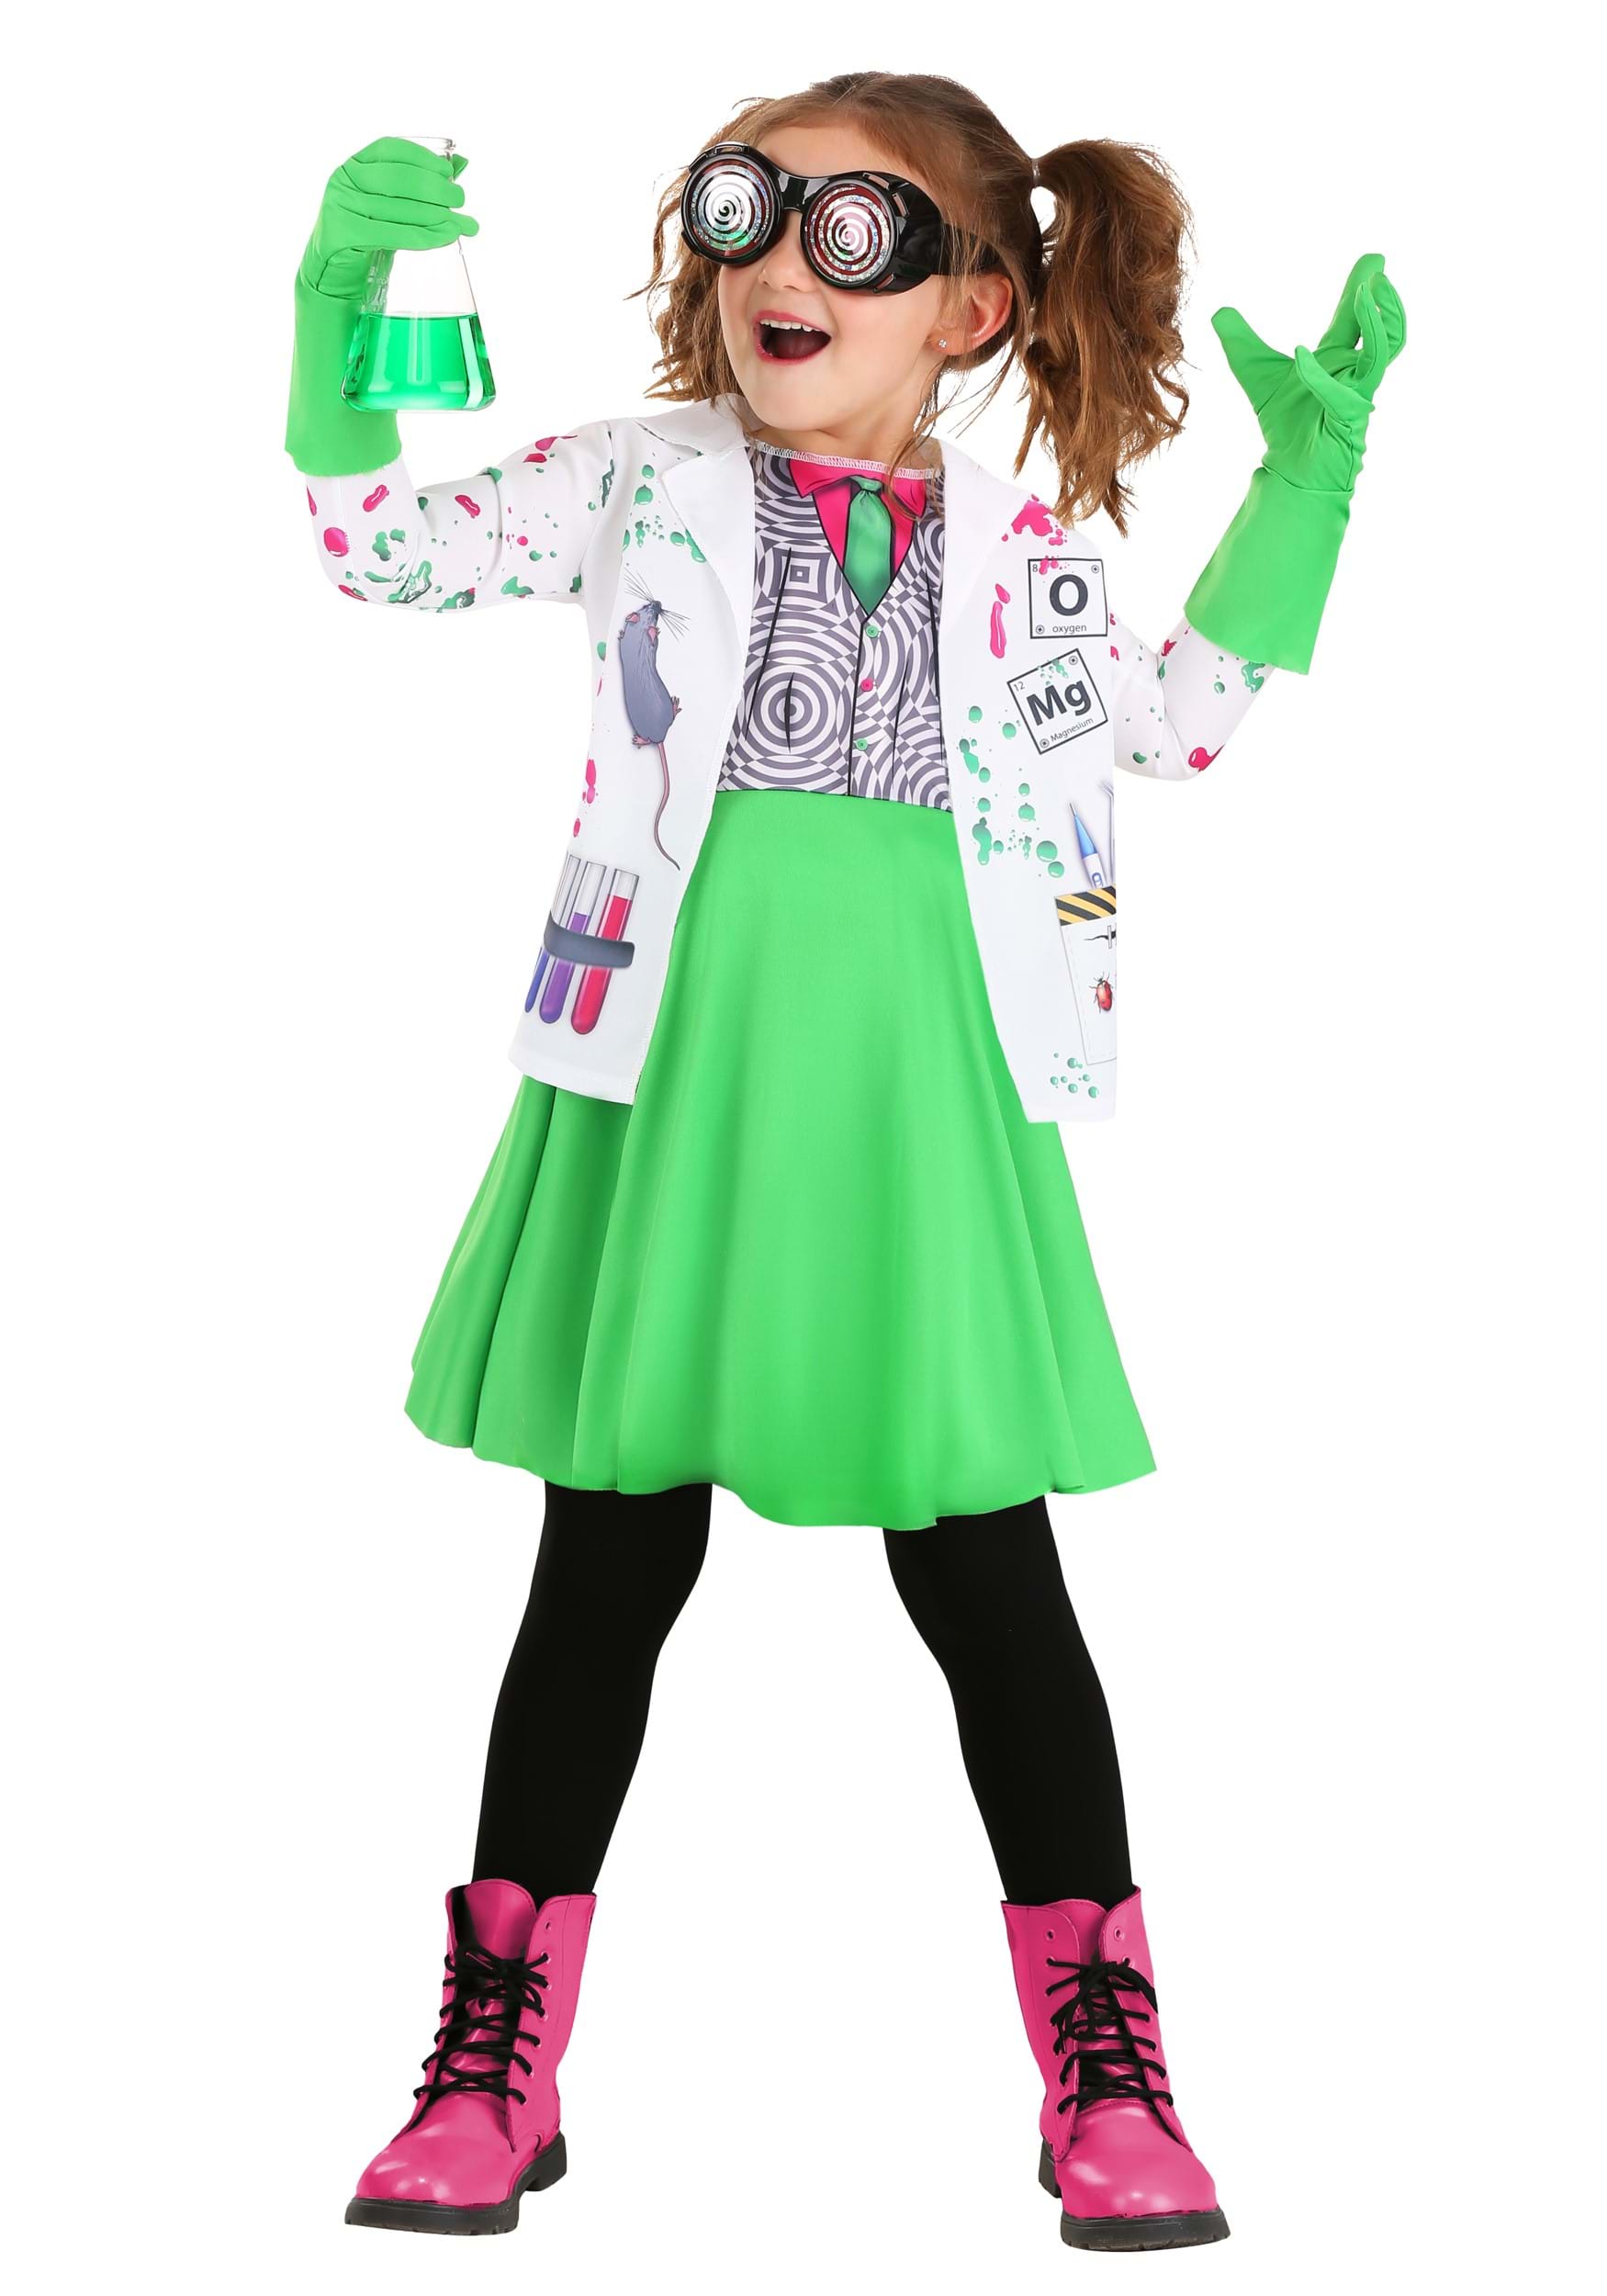 Homemade Mad Scientist Costume